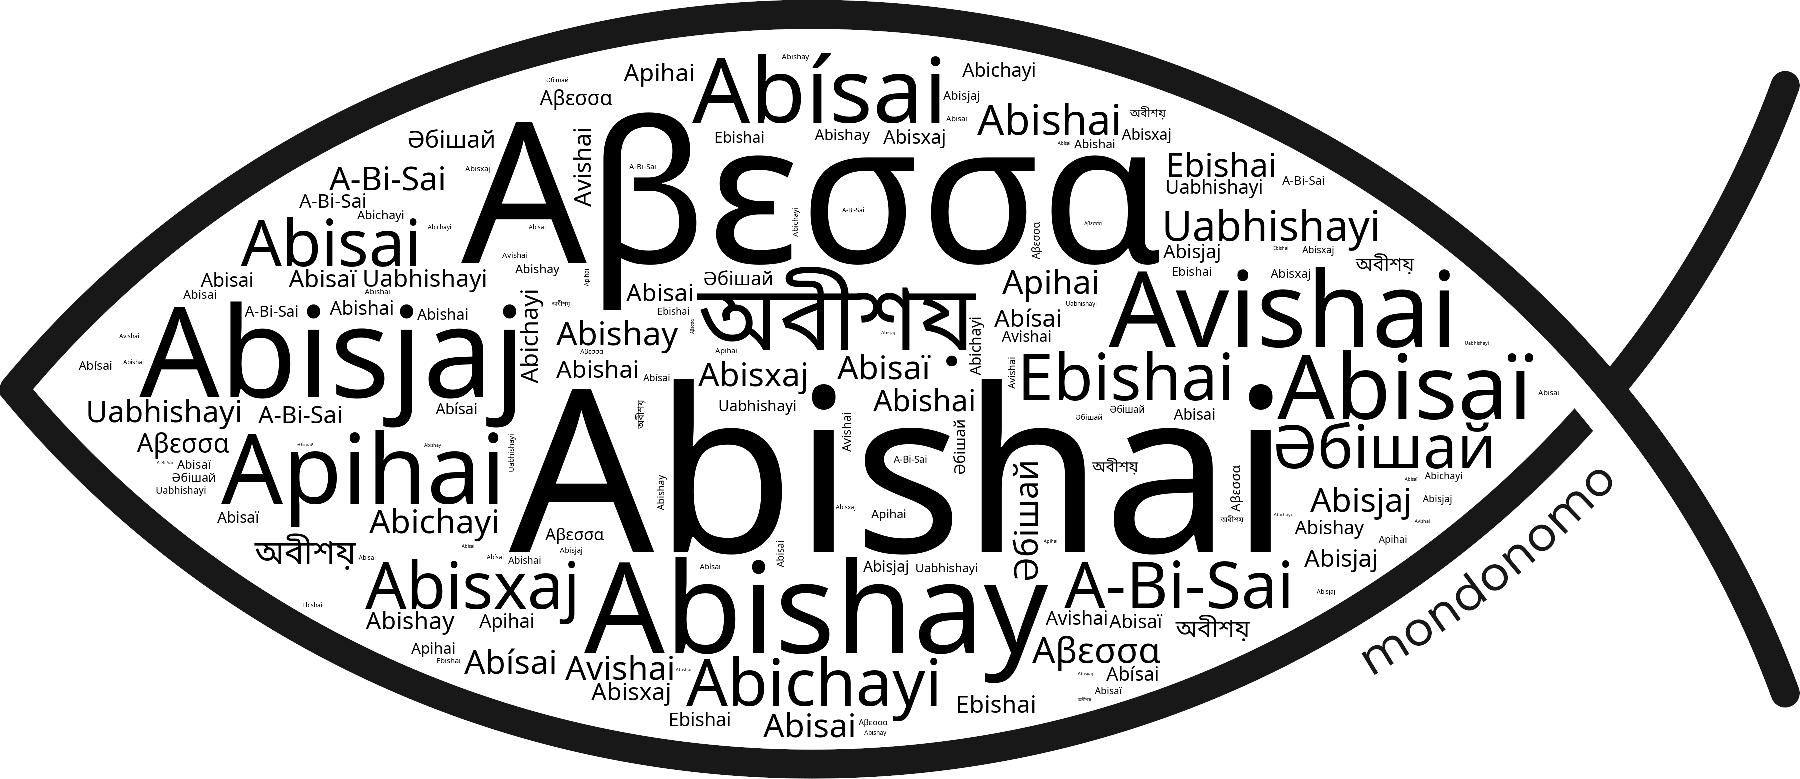 Name Abishai in the world's Bibles